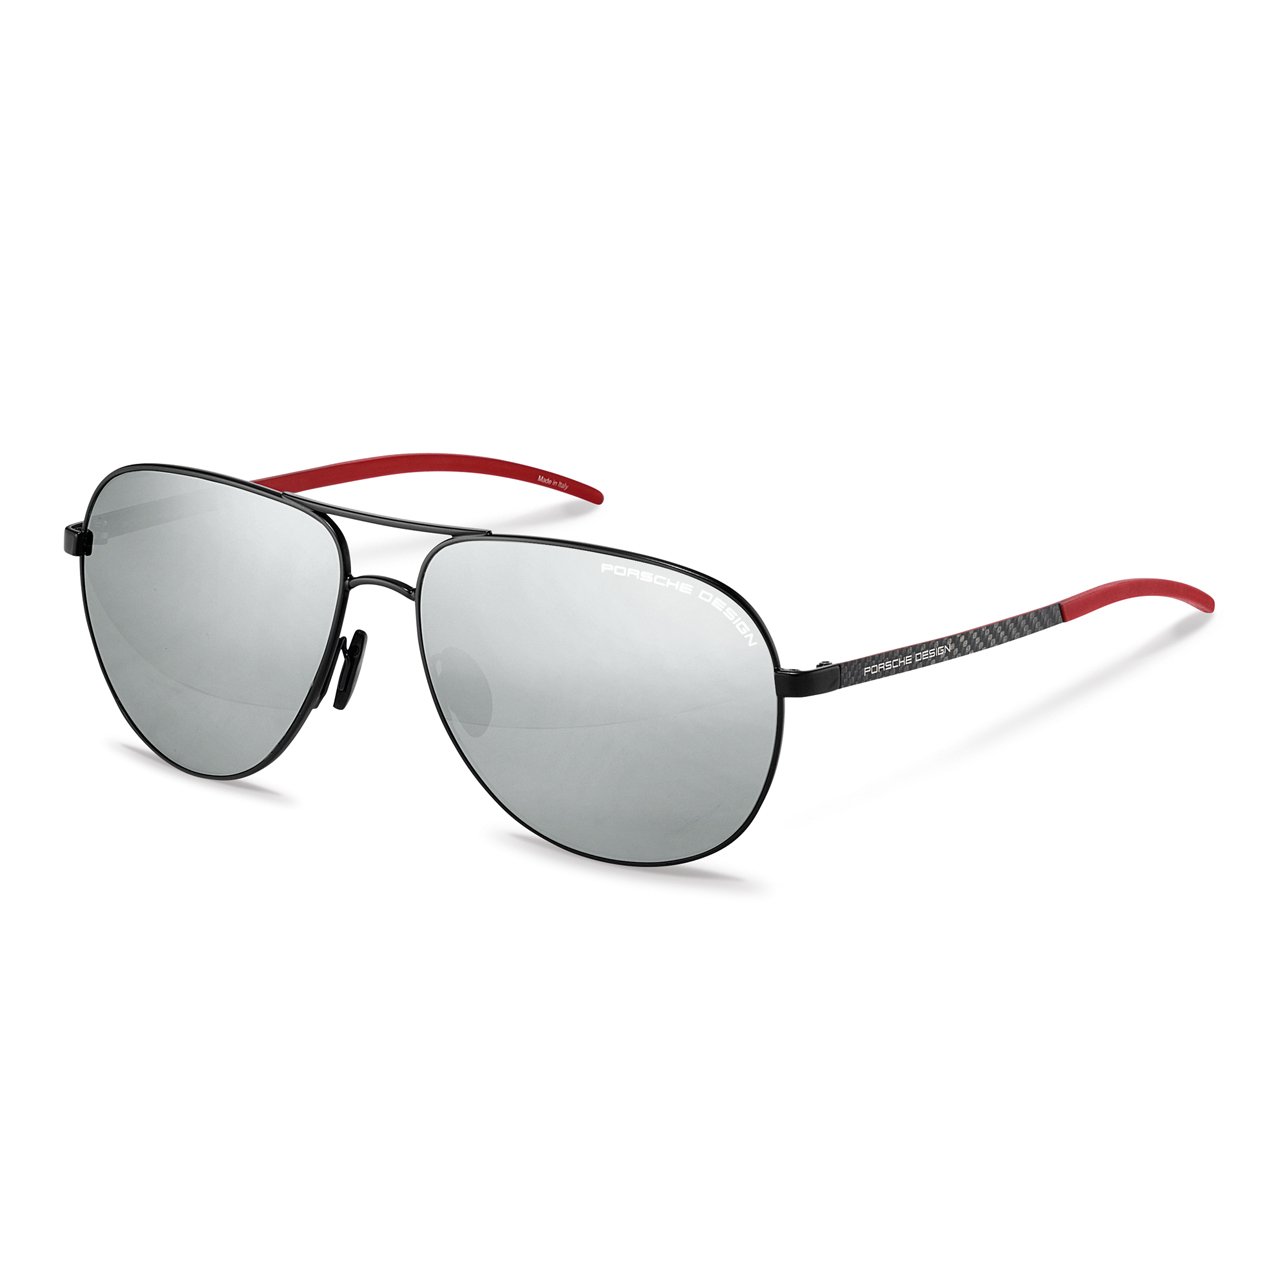 Sunglasses P´8651 - Stylish Aviator Sunglasses for Men | Porsche Design ...